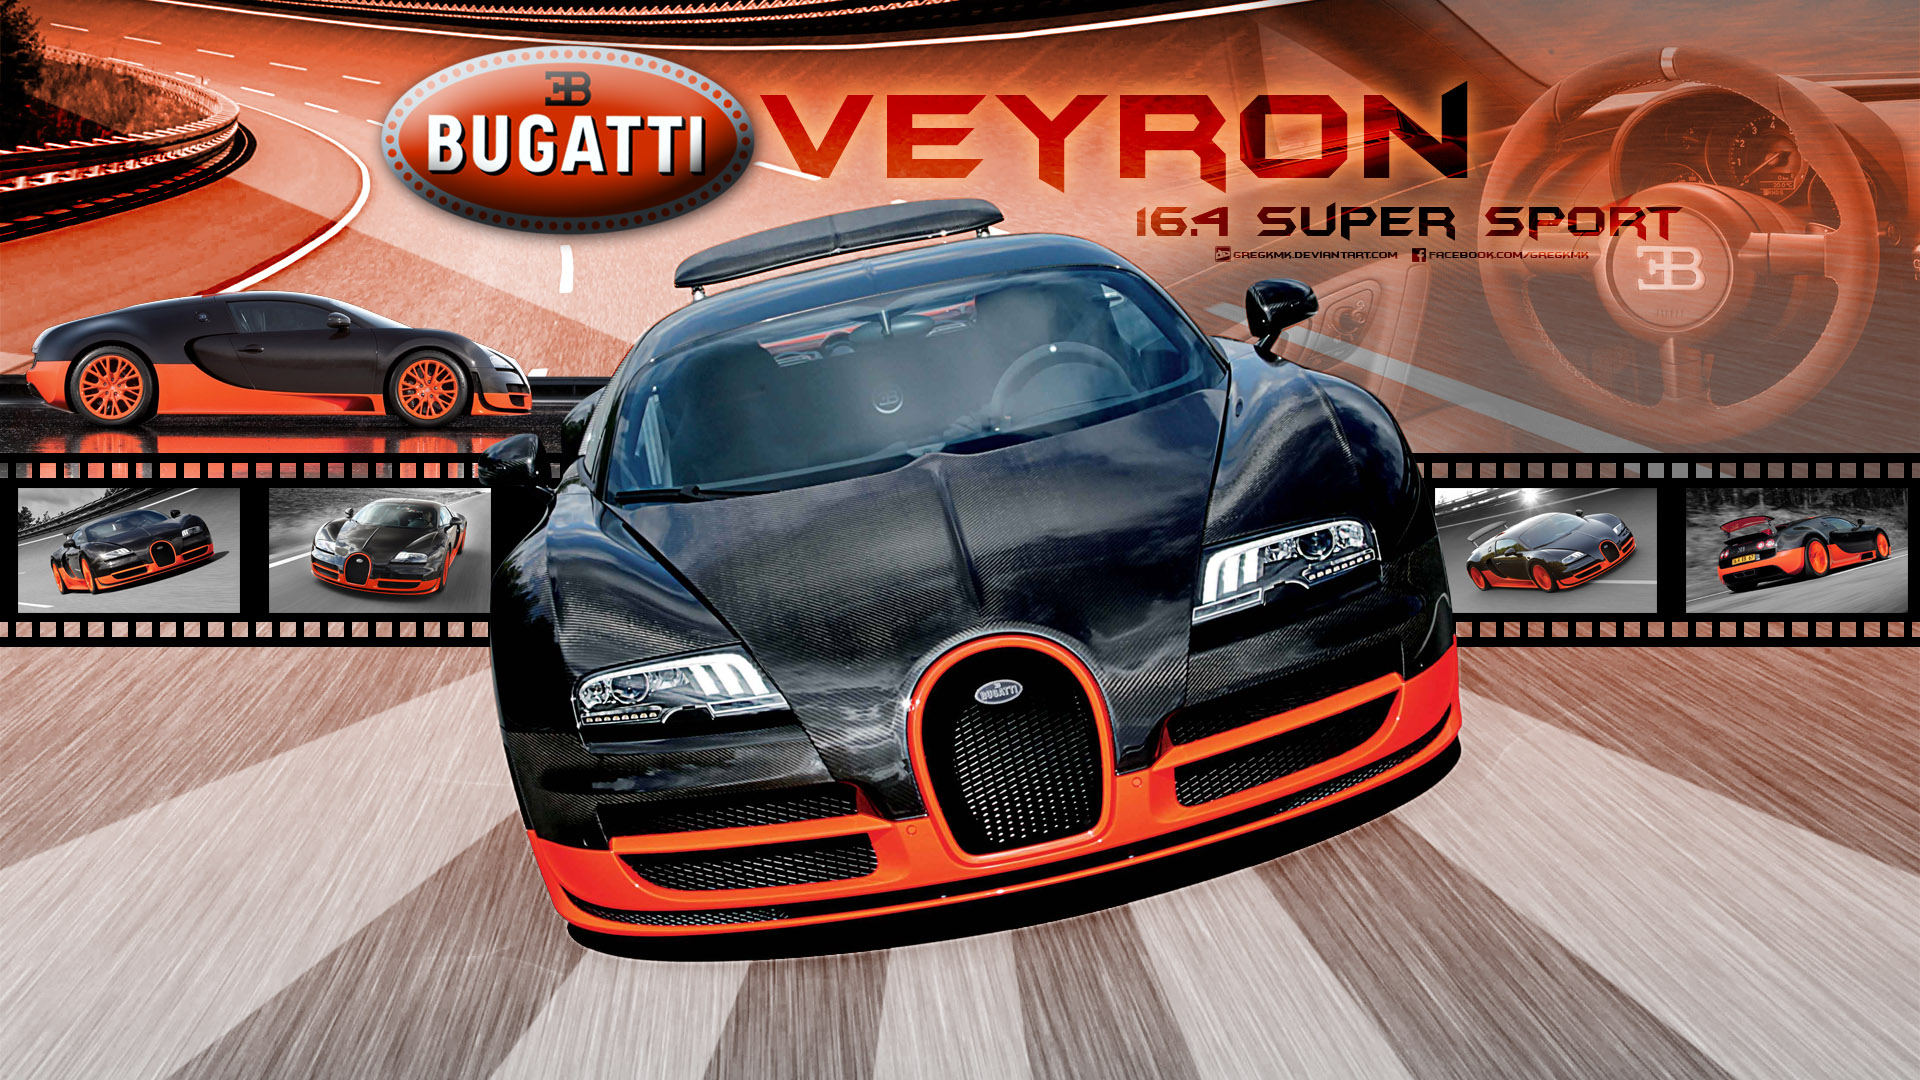 Bugatti Veyron 16-4 Super Sport Wallpapers